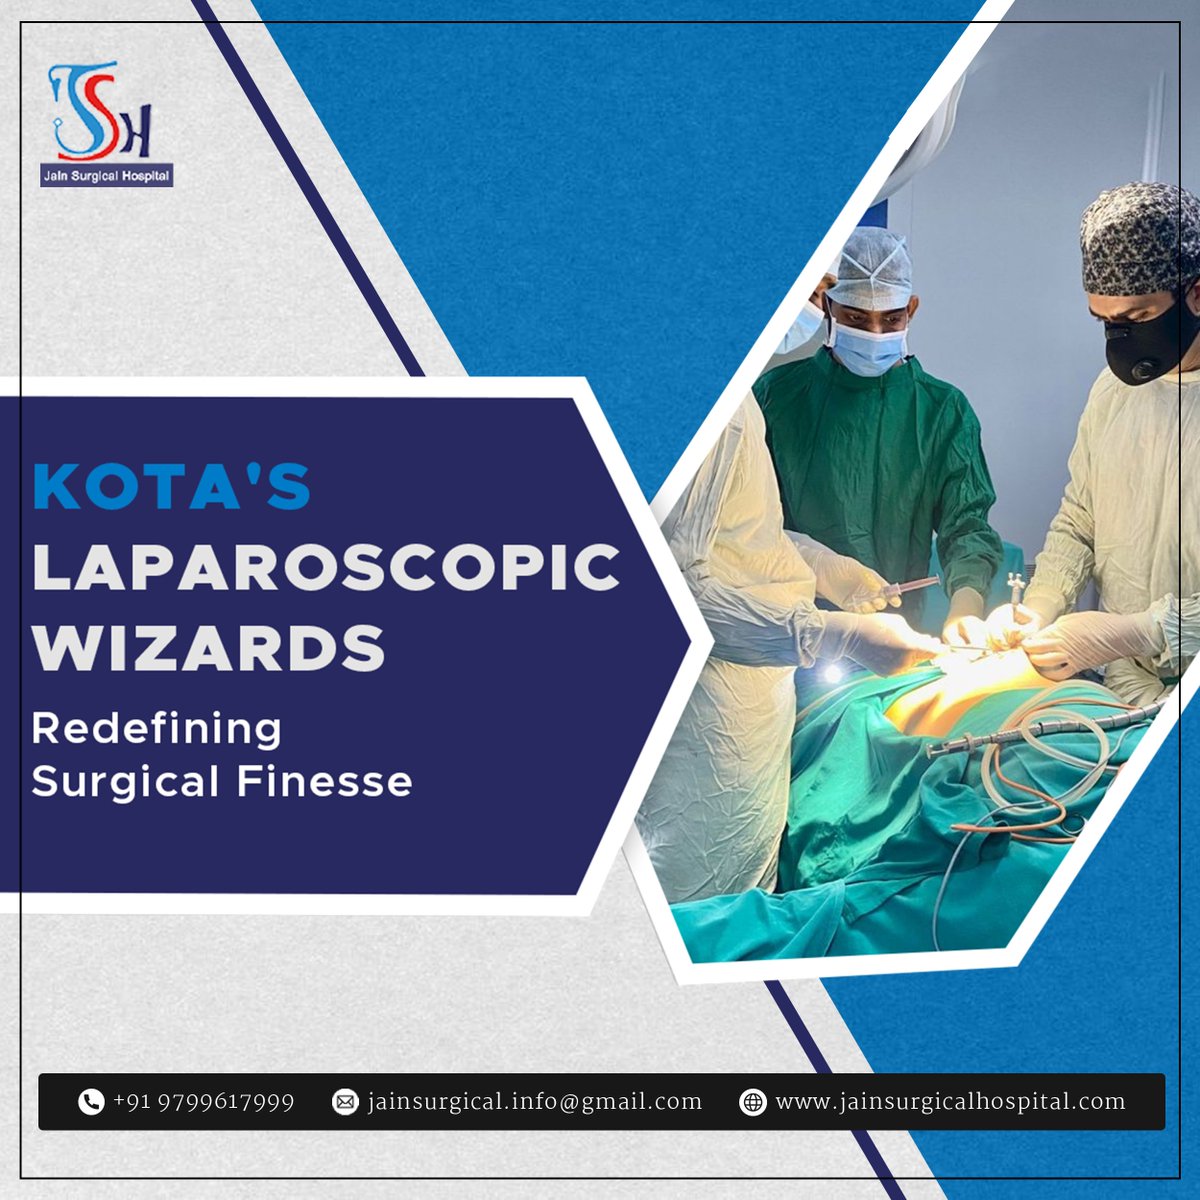 Kota's Laparoscopic Wizards Redefining Surgical Finesse

#JainSurgicalHospital #kota #laparoscopicsurgery #medicalservices #treatment #hospitalforspecialsurgery #surgeryhospital #healthcare #pilestreatment